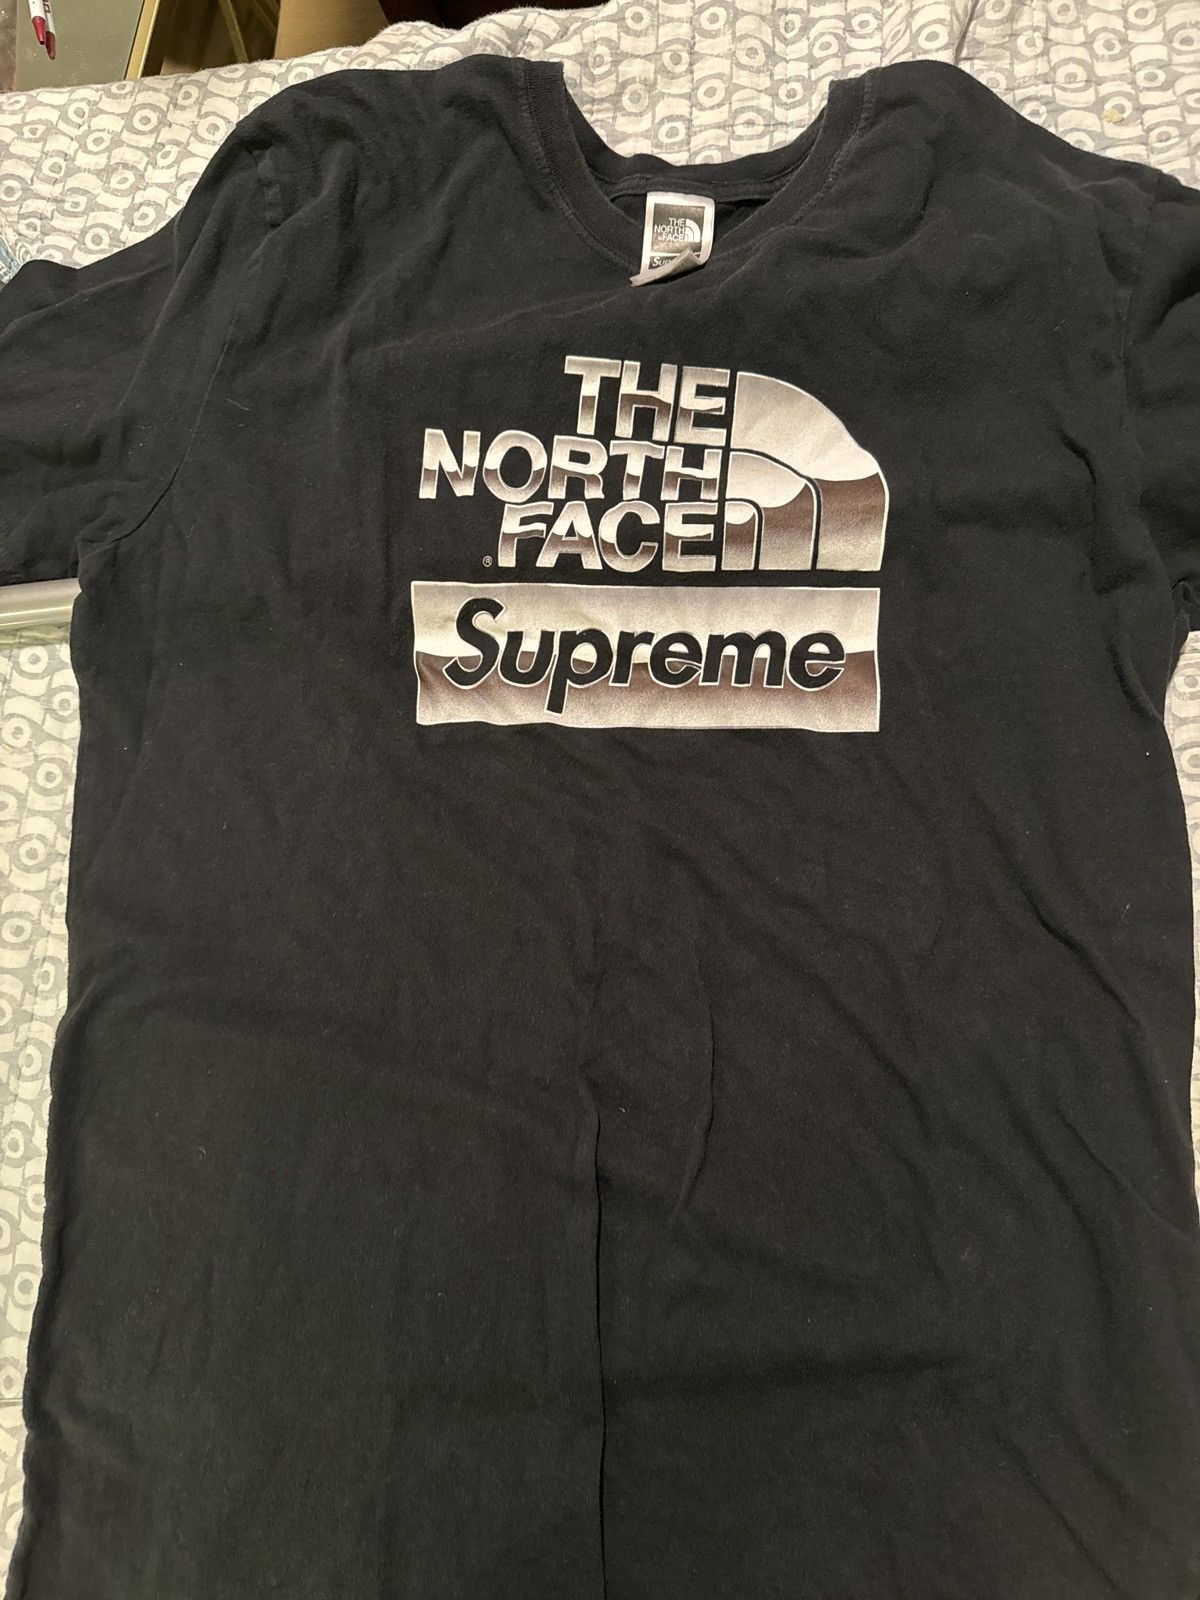 Supreme Supreme x northface metallic t shirt | Grailed